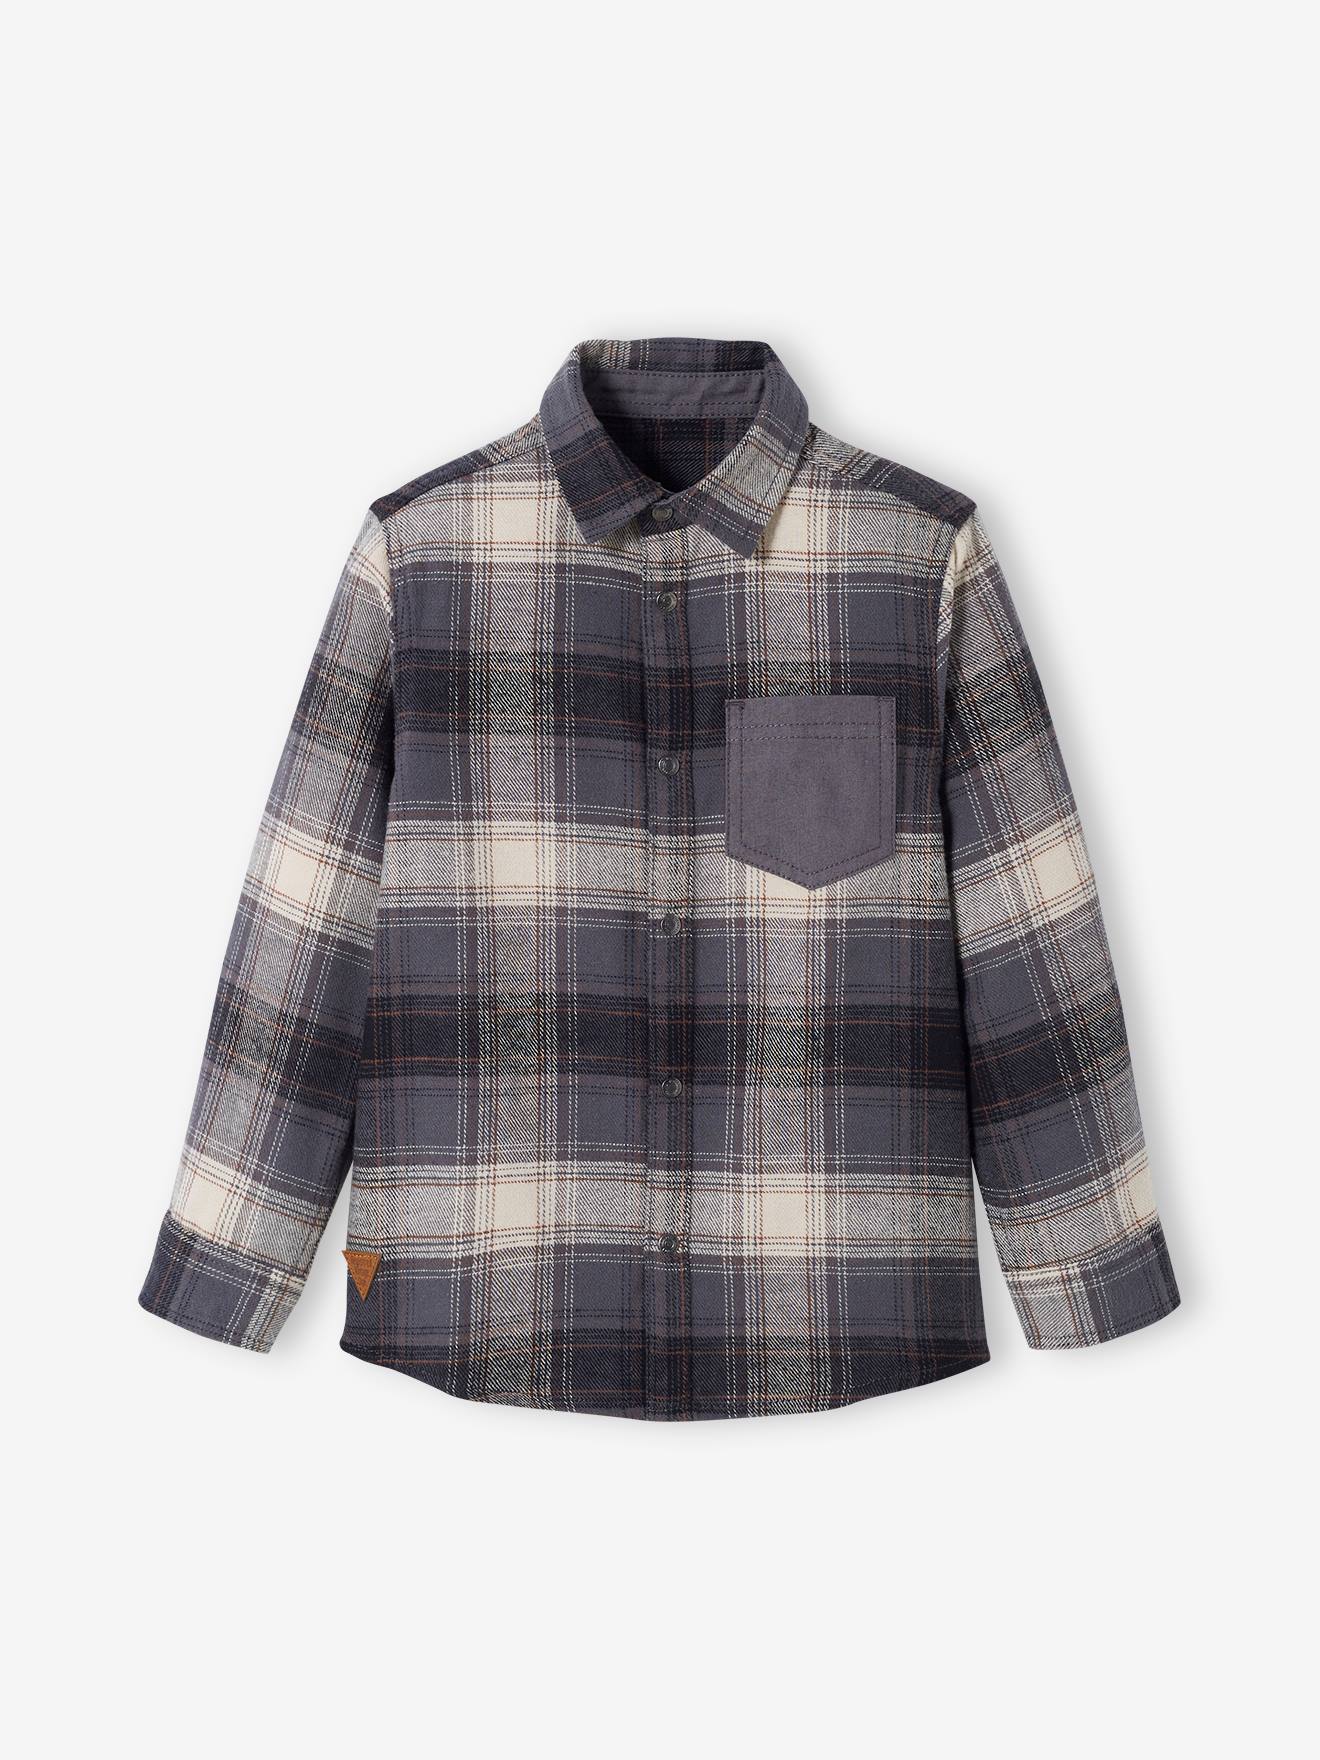 Flannel Chequered Shirt for Boys brown dark checks